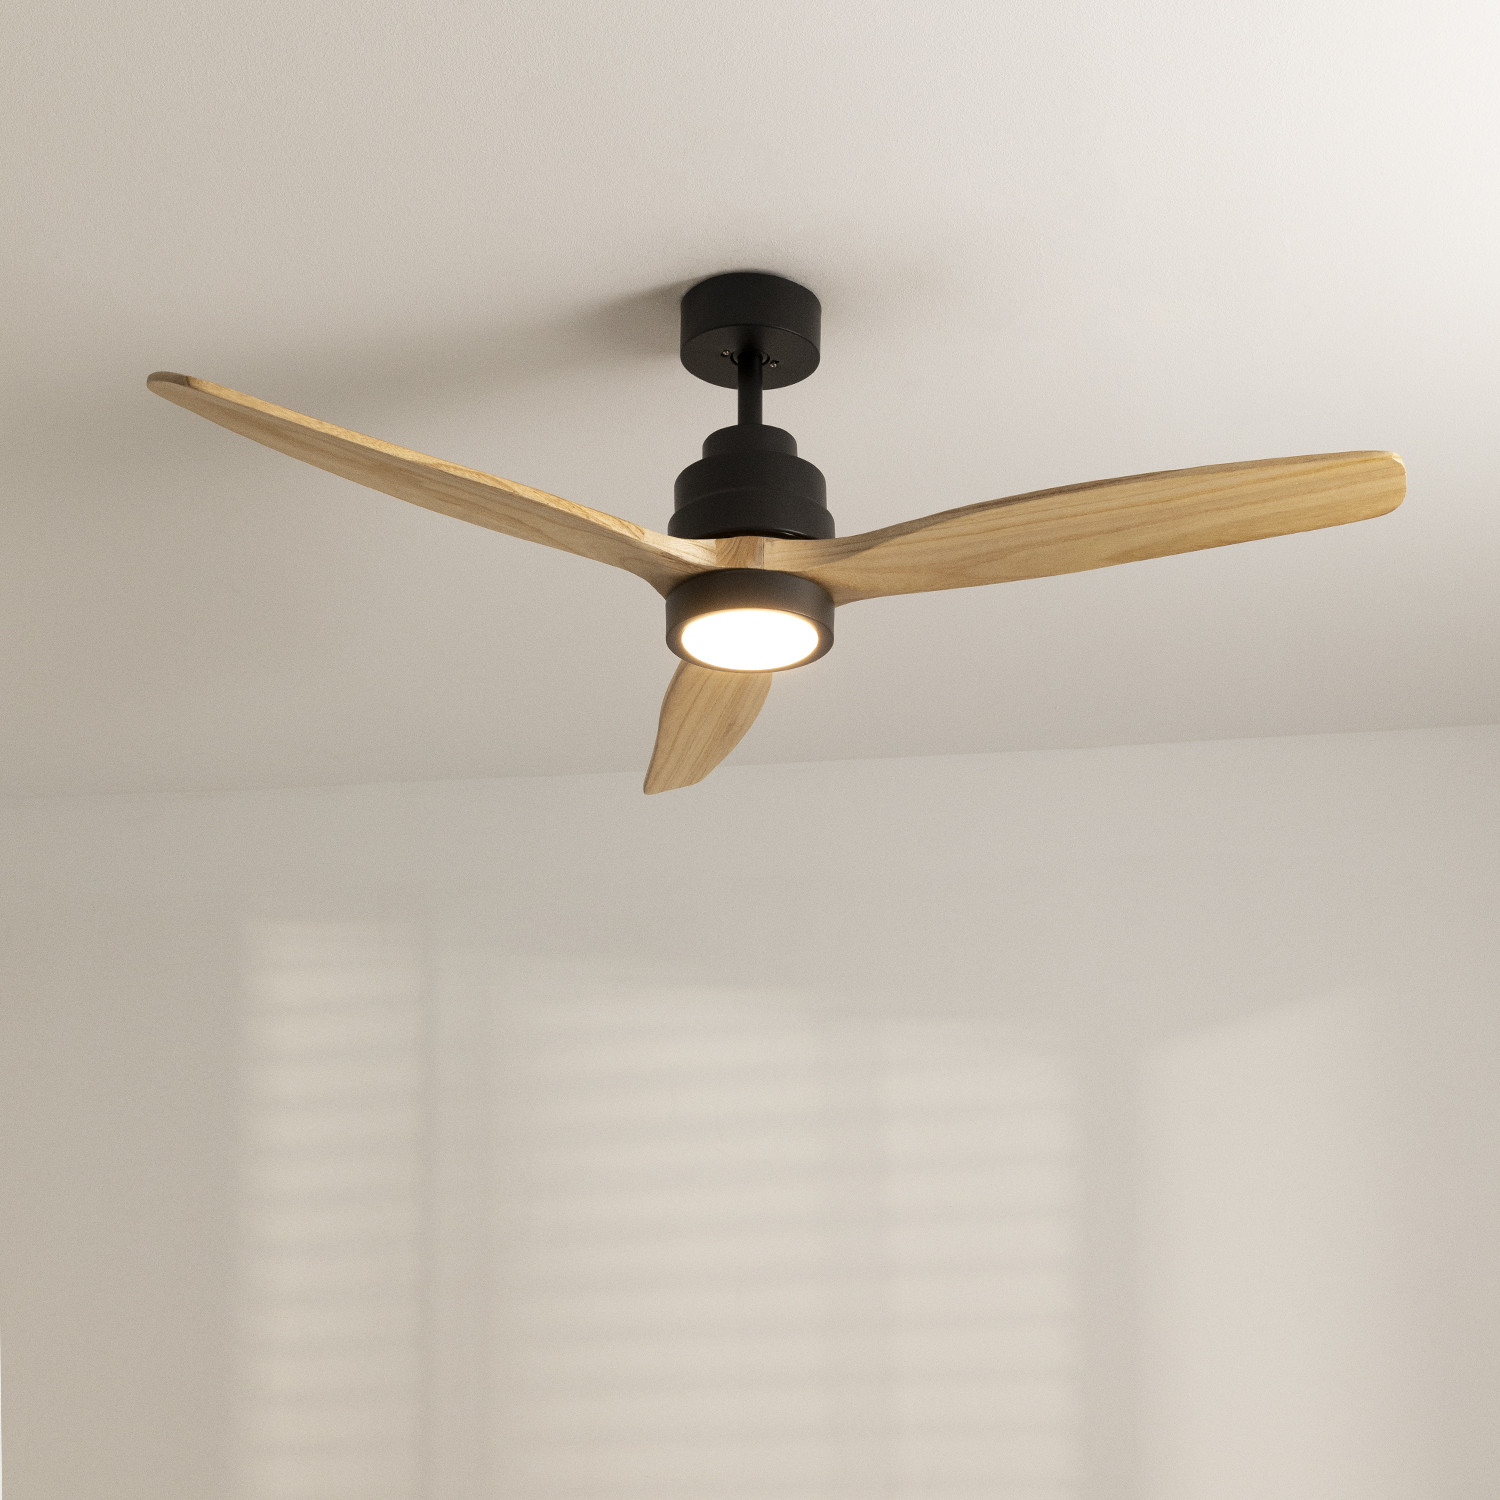 LED Decken Ventilator Lampe Wind Maschine Lüfter Raum Kühler Big Light 